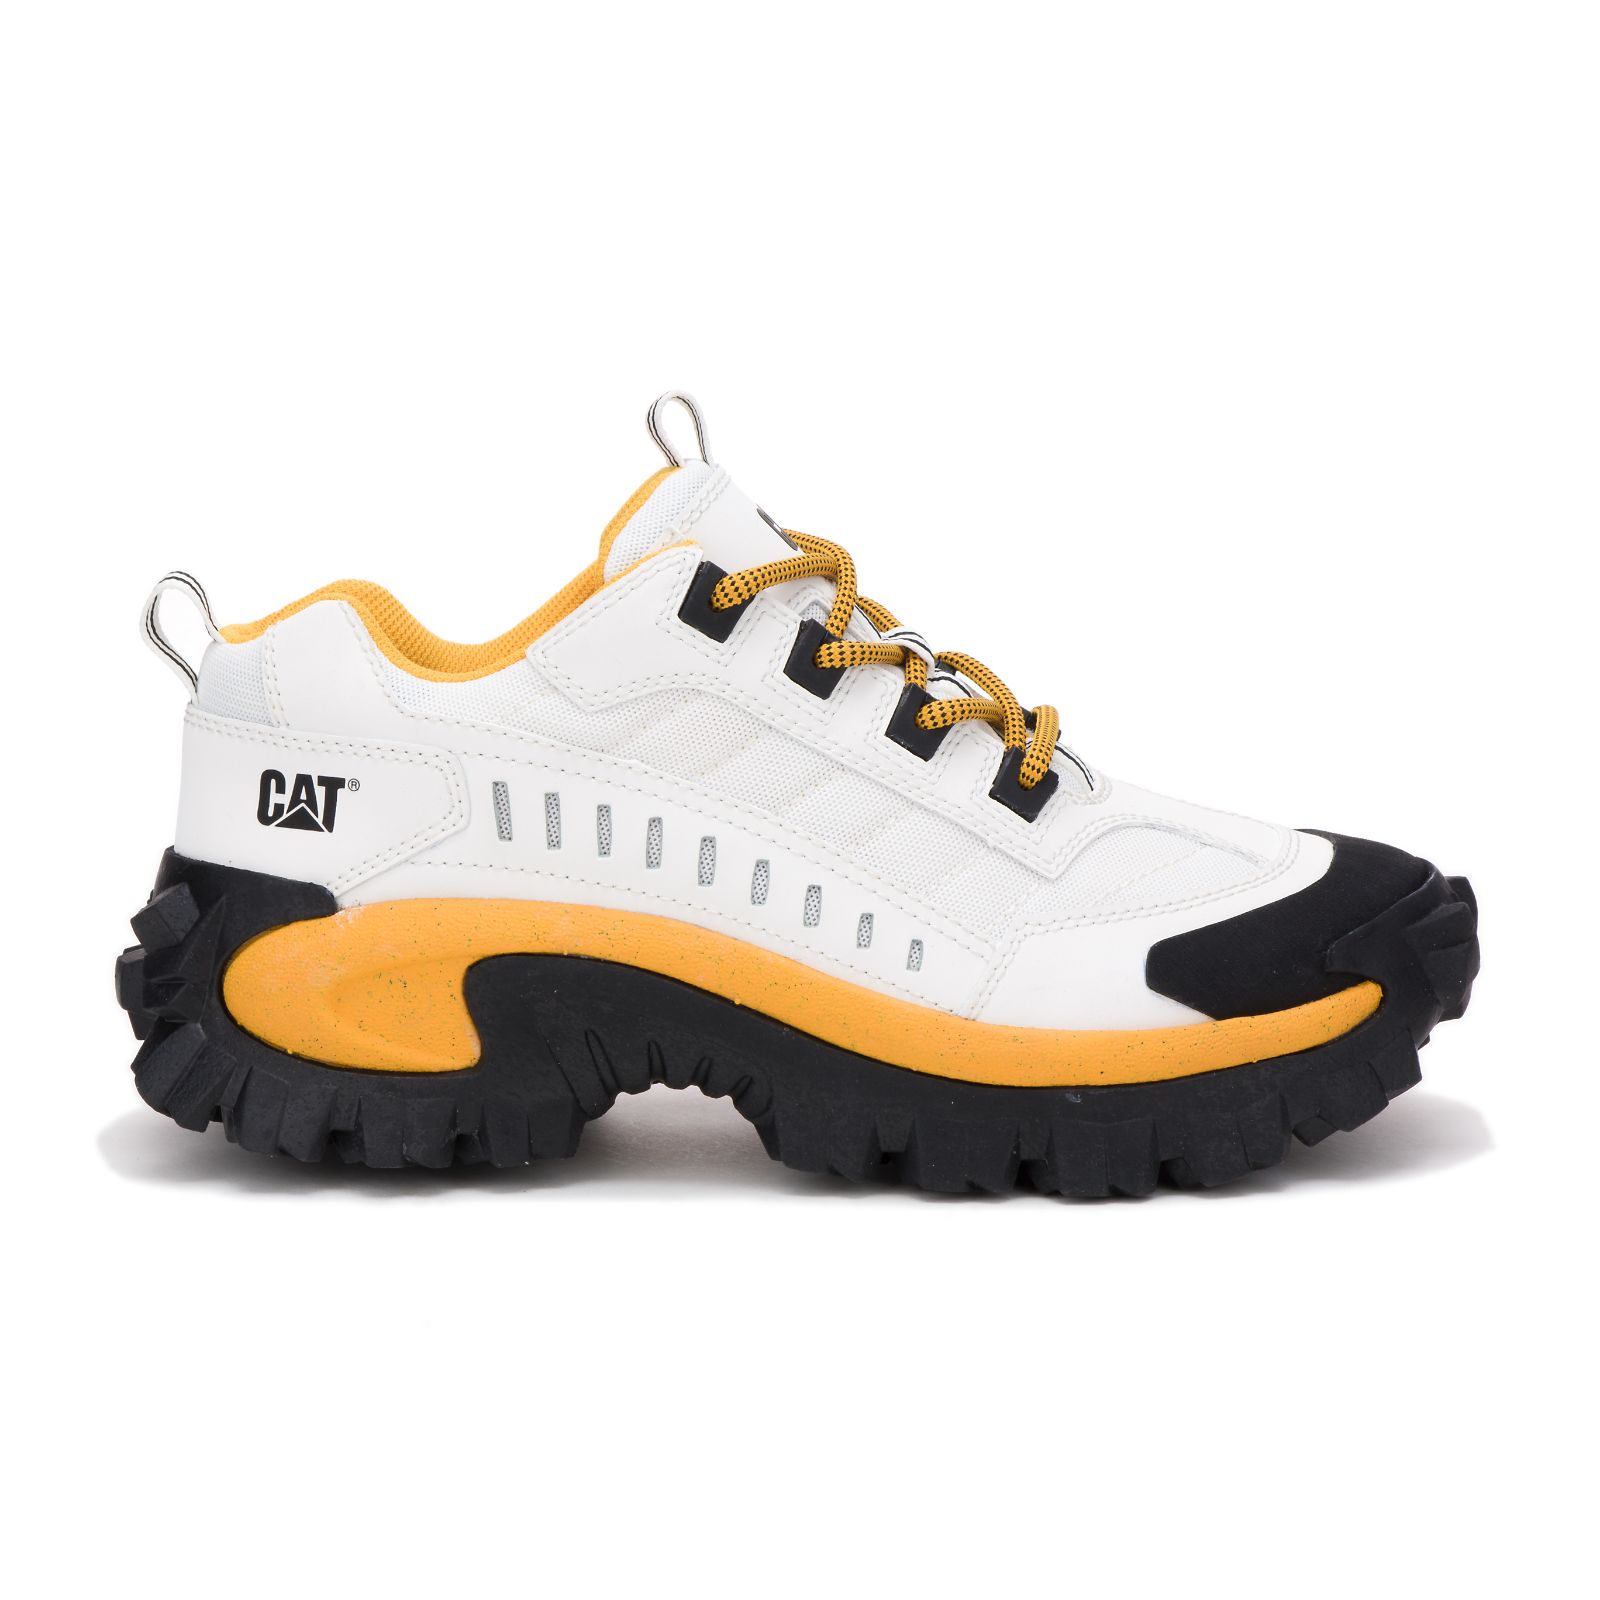 Caterpillar Shoes Pakistan - Caterpillar Intruder Mens Sneakers White Yellow (574130-WBJ)